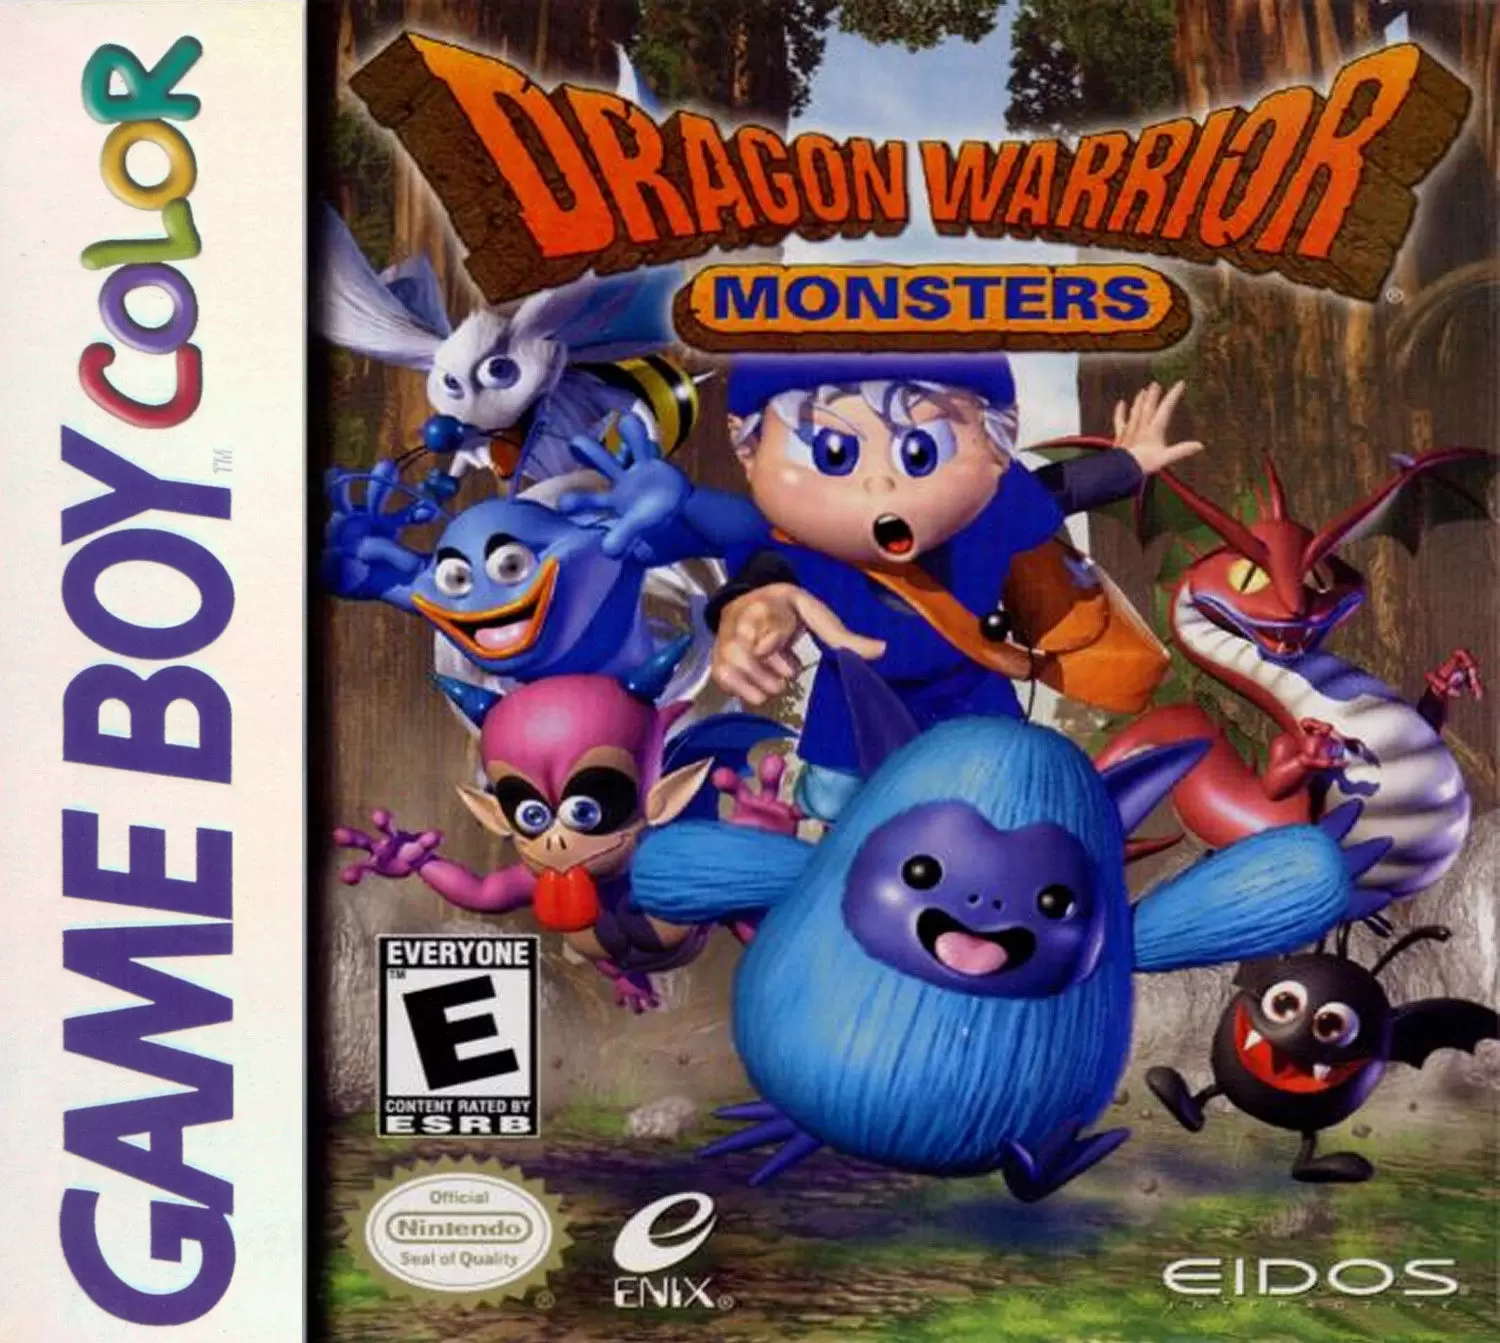 Game Boy Color Games - Dragon Warrior Monsters